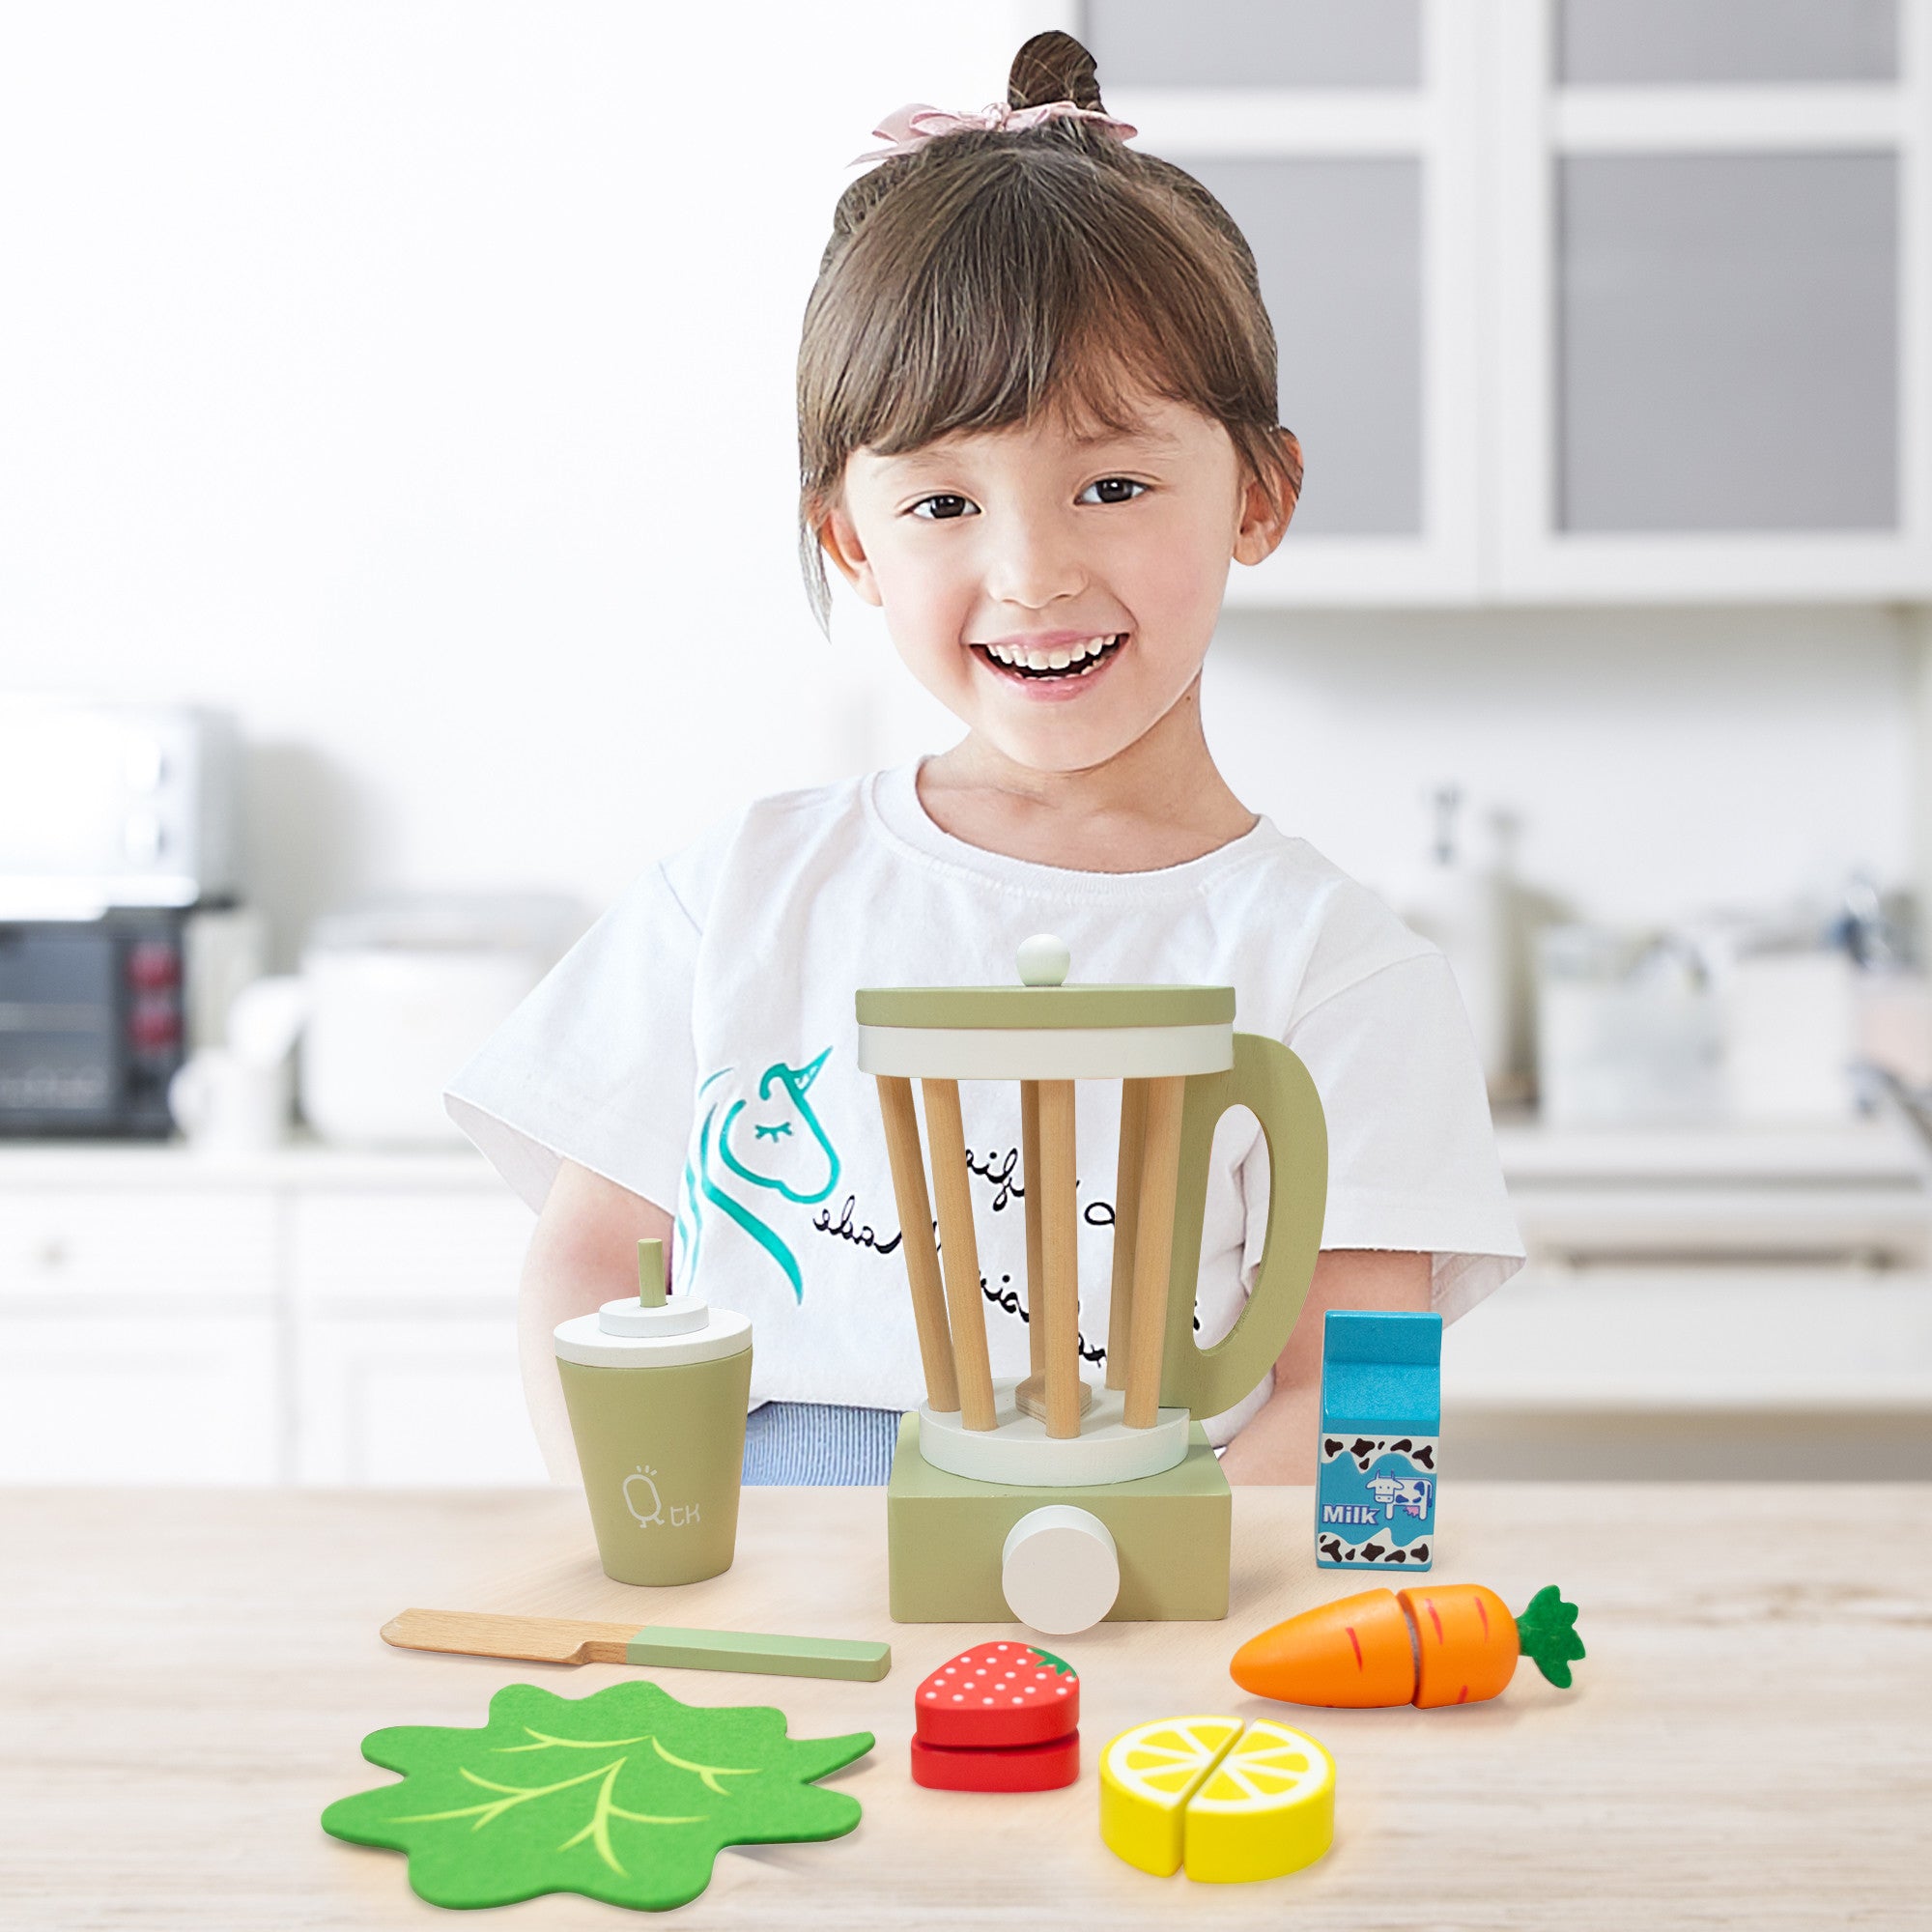 Hape Fruit Smoothie Blender Kids Wooden Pretend Kitchen Appliance Play Set  Toy for sale online